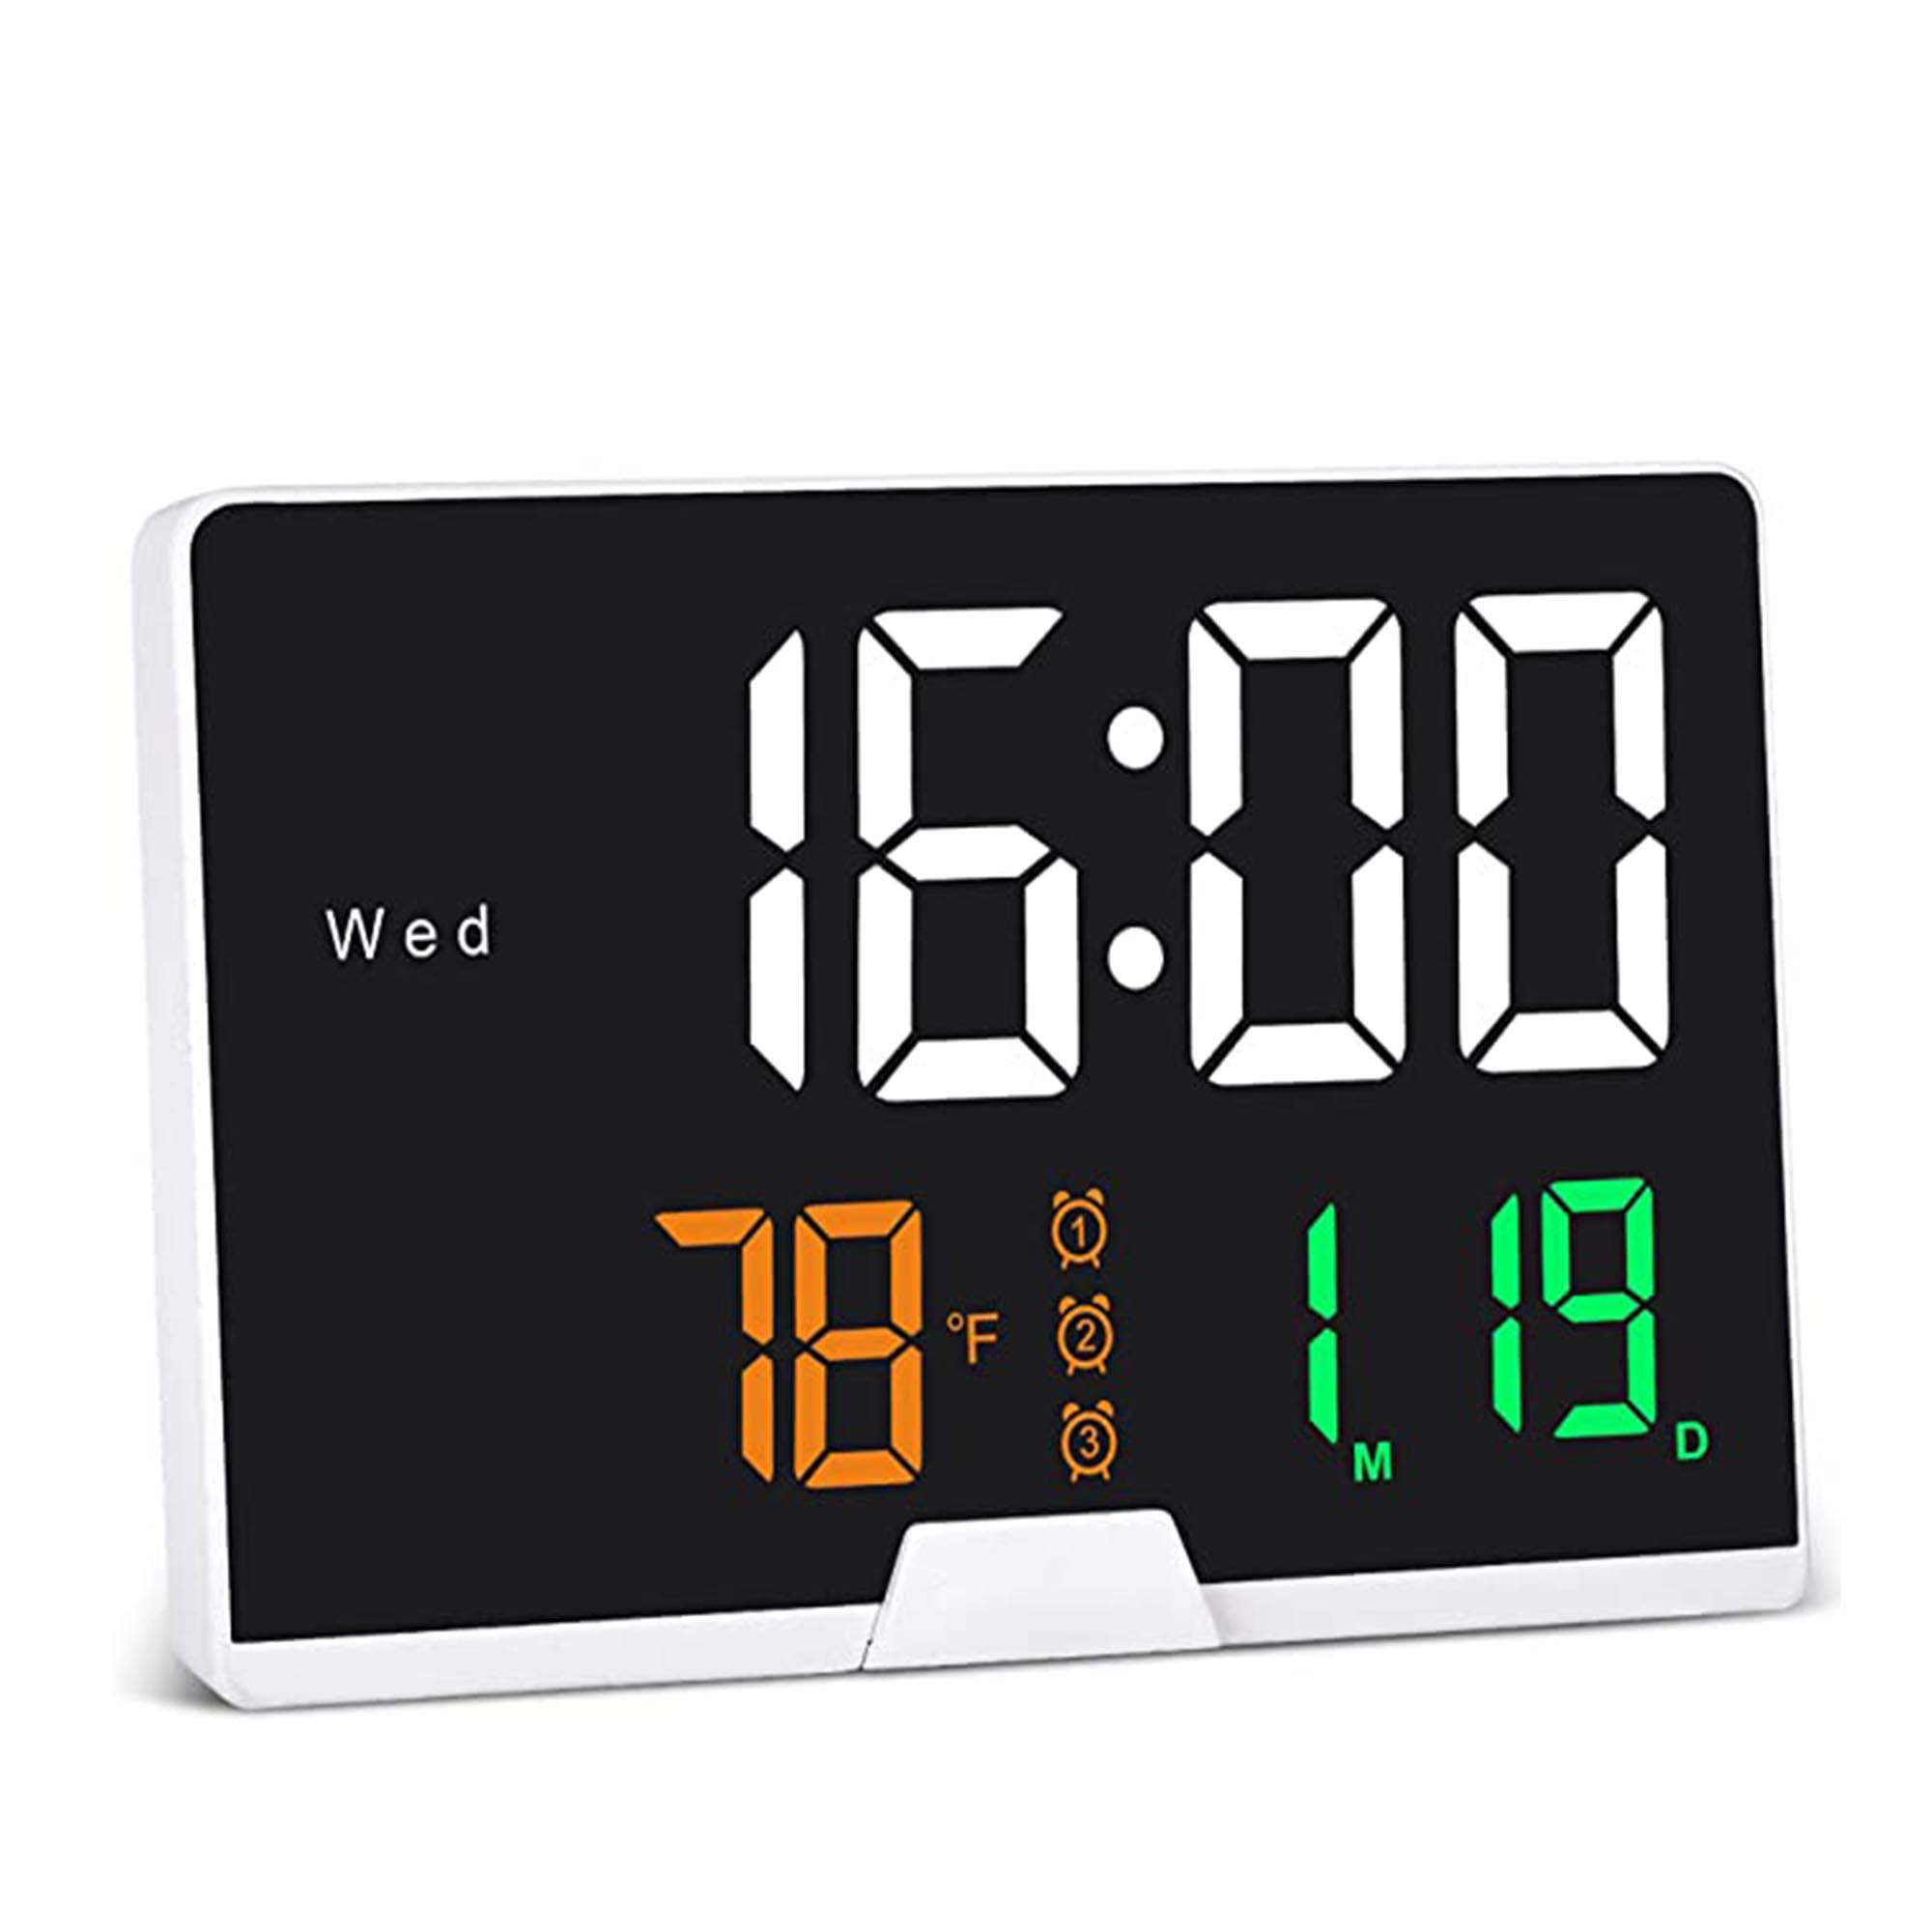 Westclox Analog Travel Alarm Clock #47312  NEW  Battery Powered 